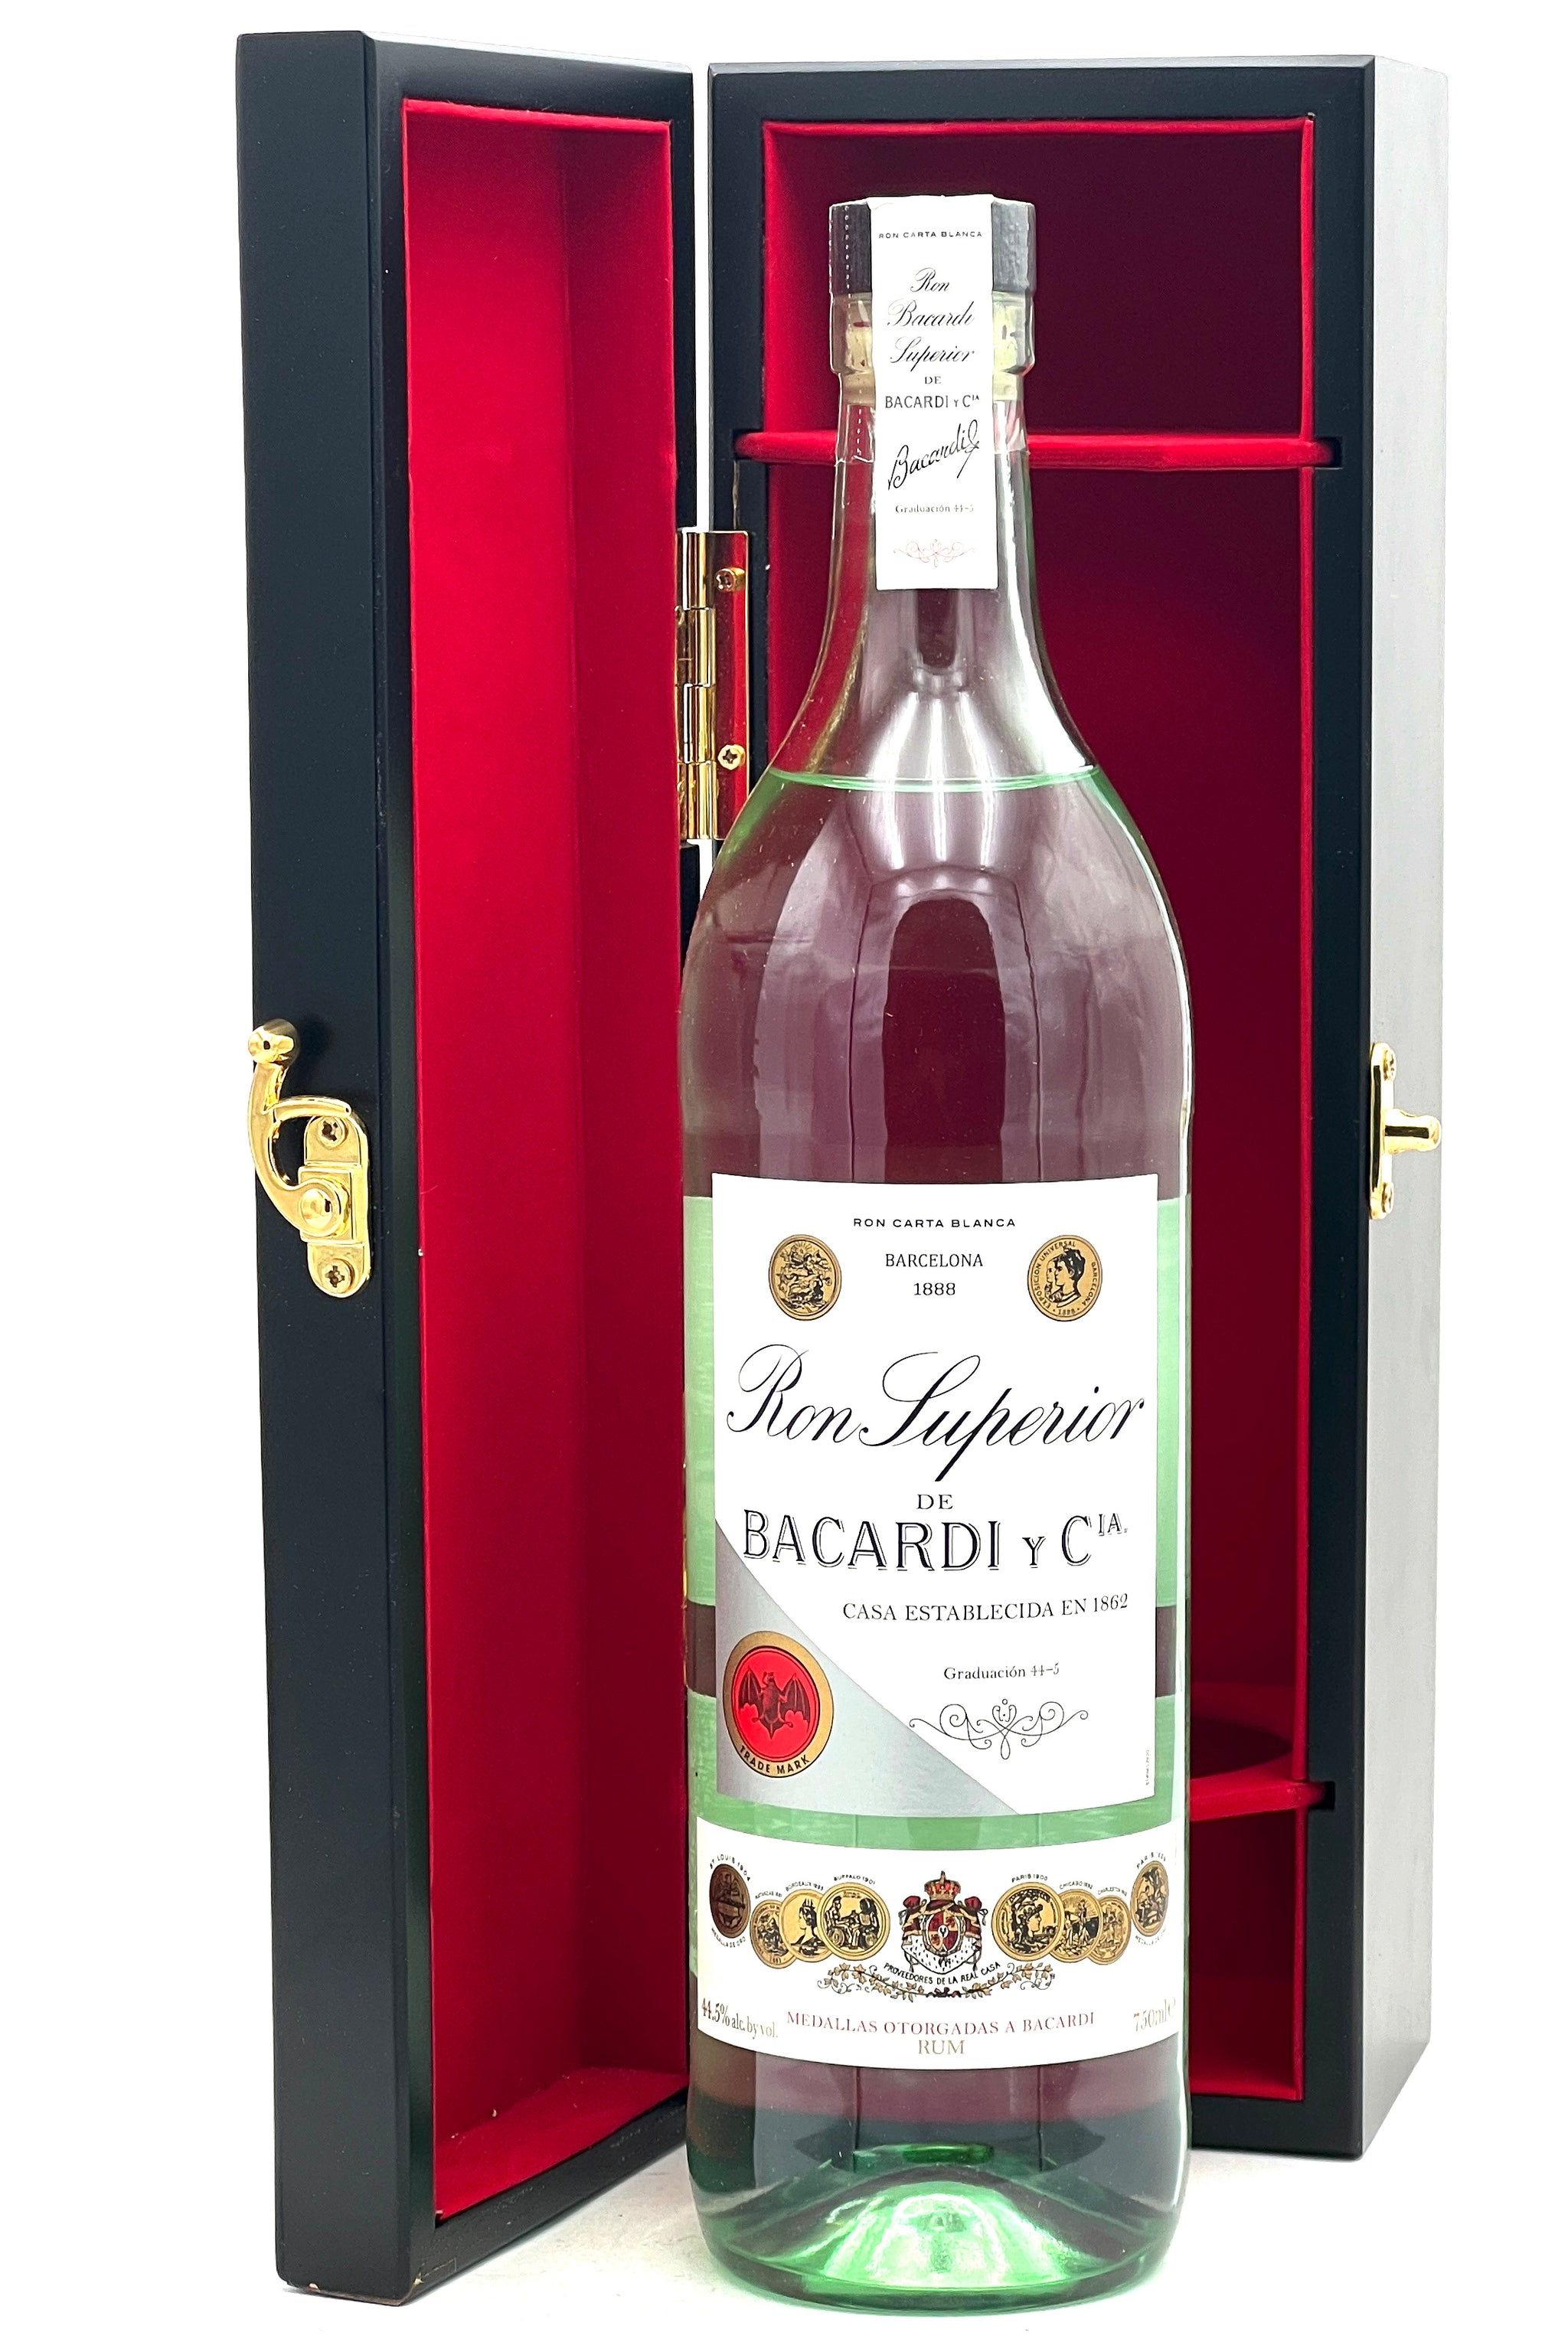 Heritage Superior Ron Bacardi Bacardi Rum Limited Buy Light Y de Cia Edition Online